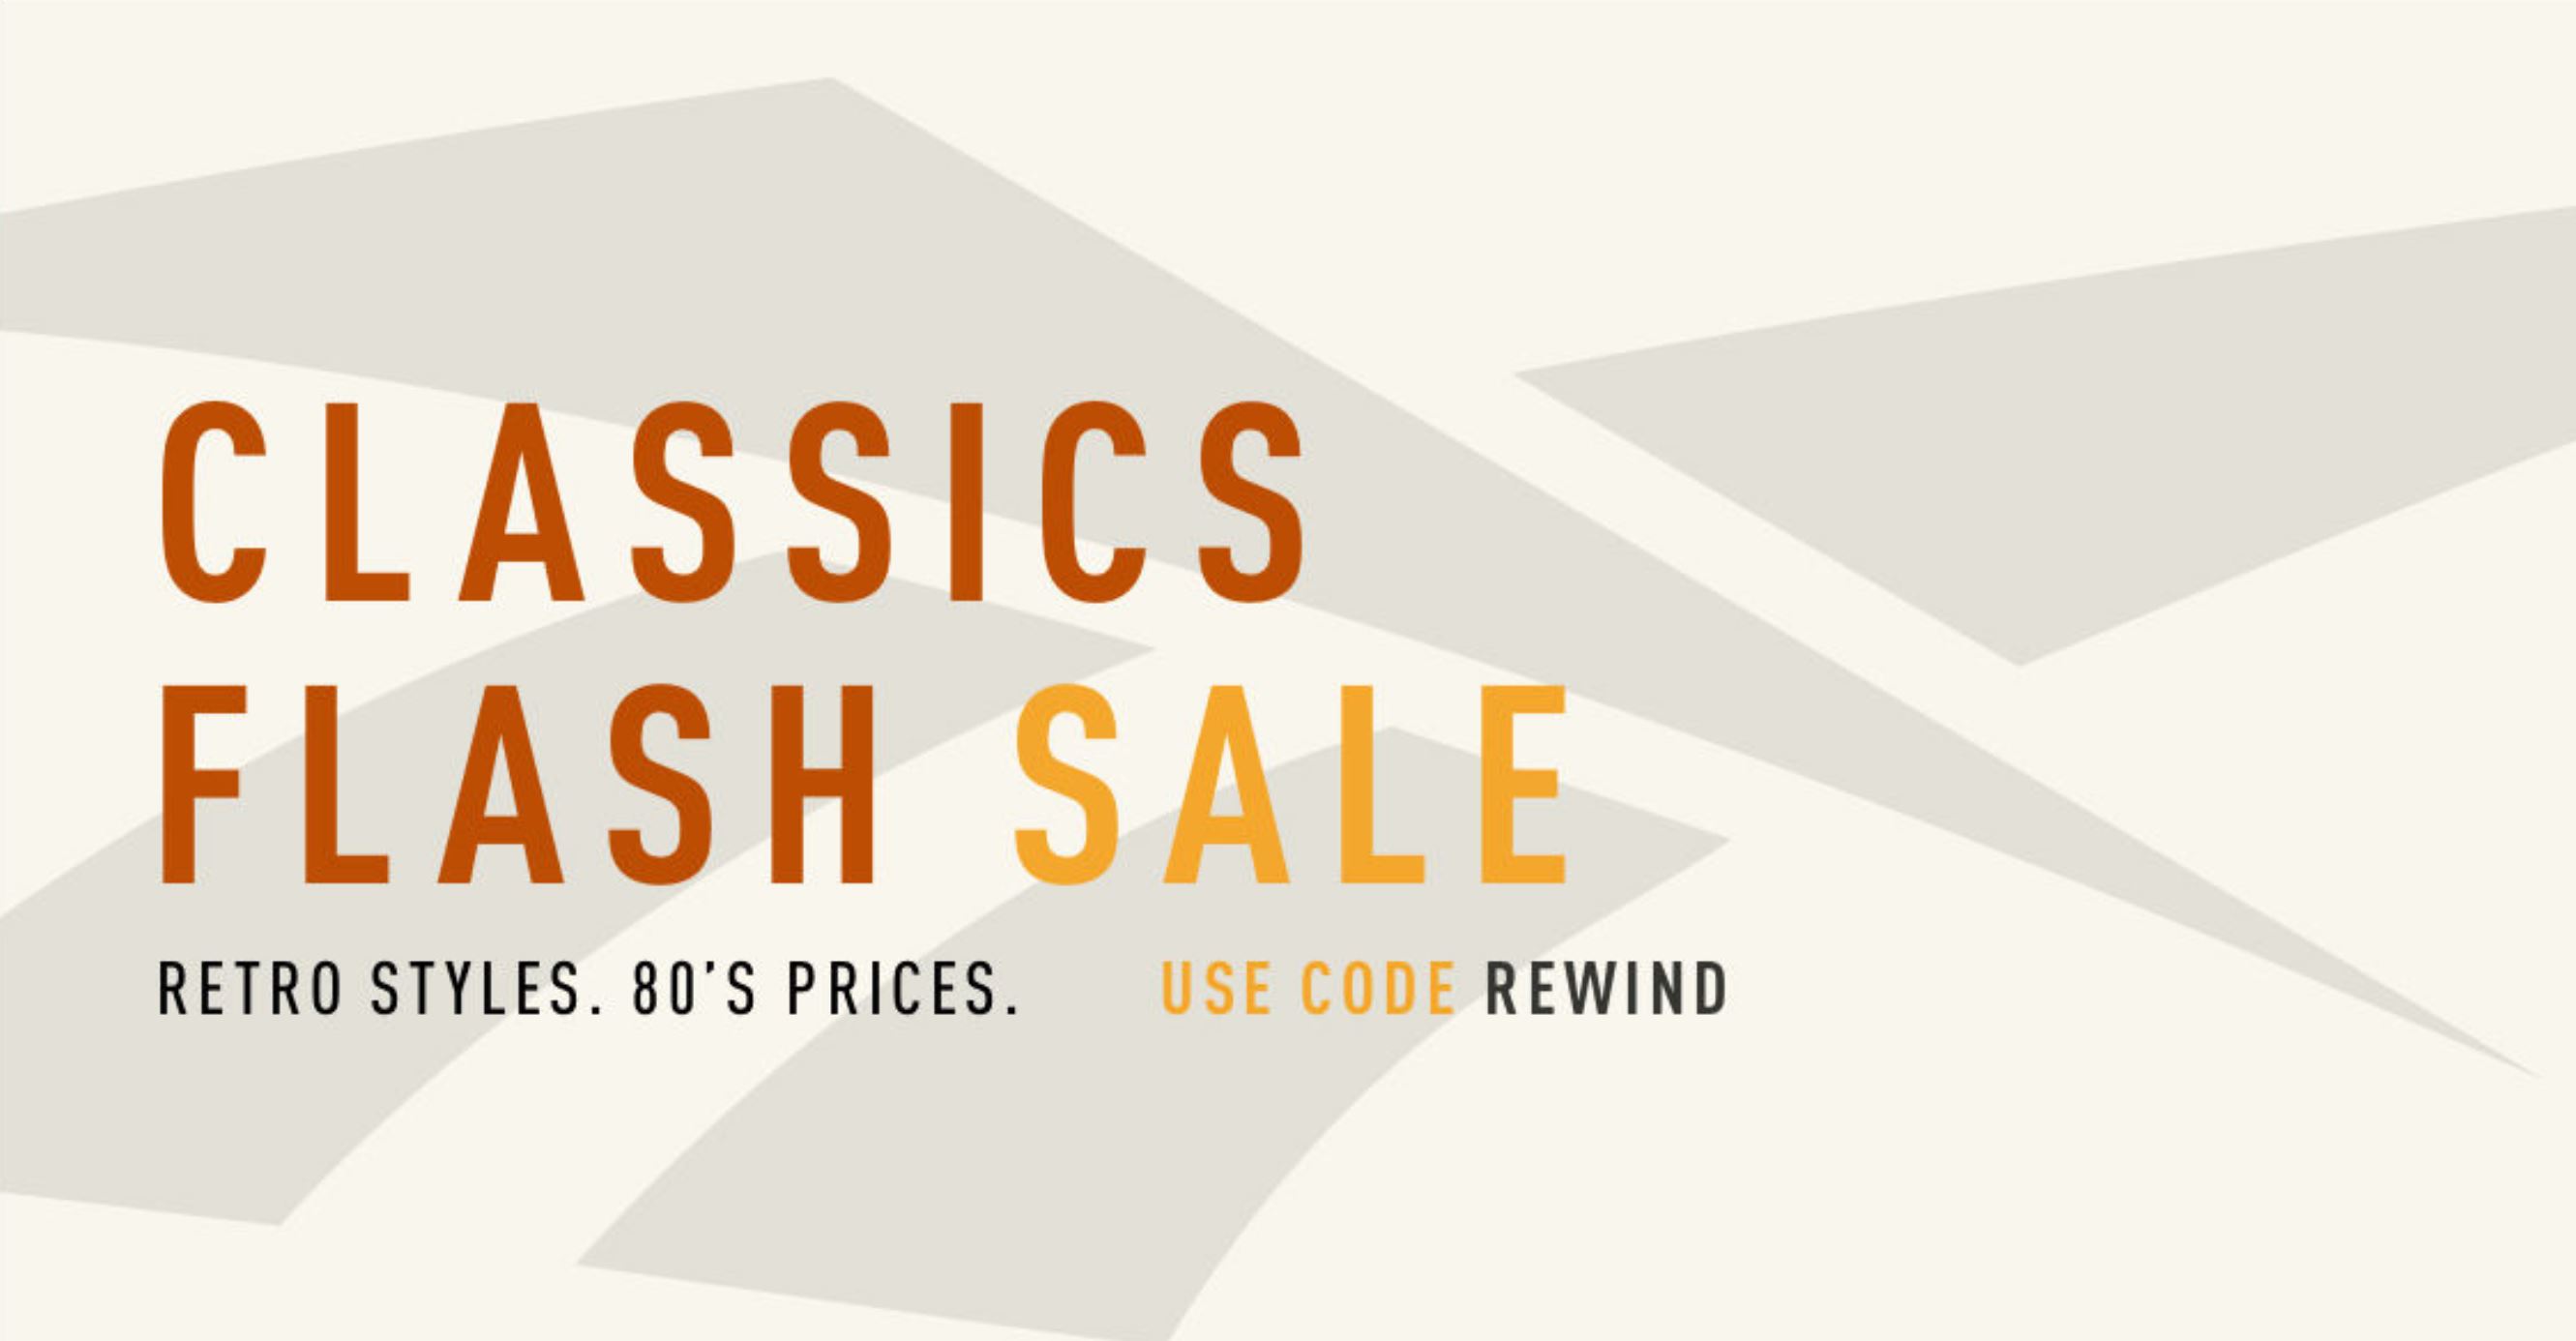 reebok classic flash sale